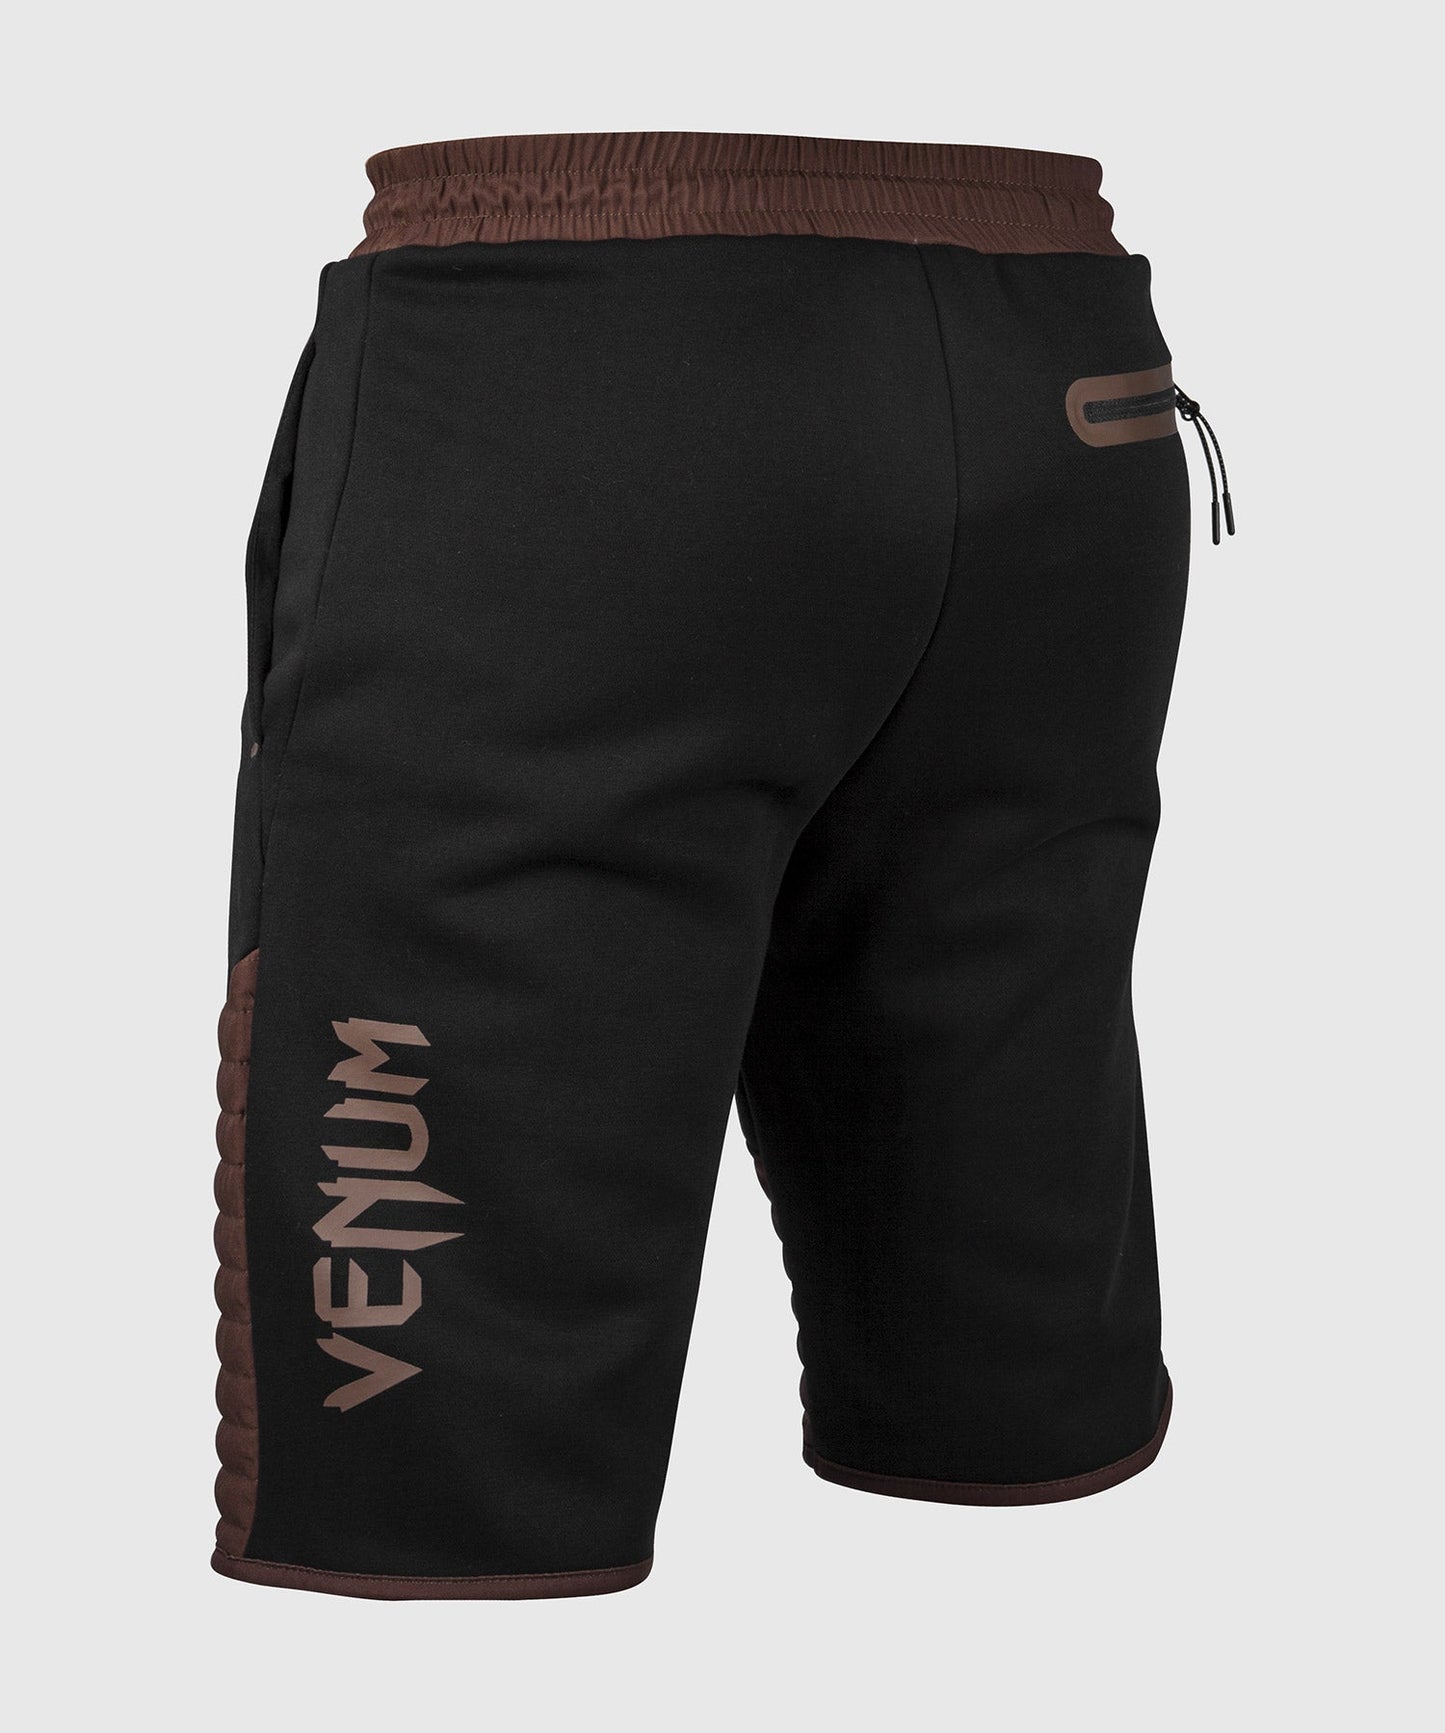 Venum Laser Cotton Shorts - Black/Brown